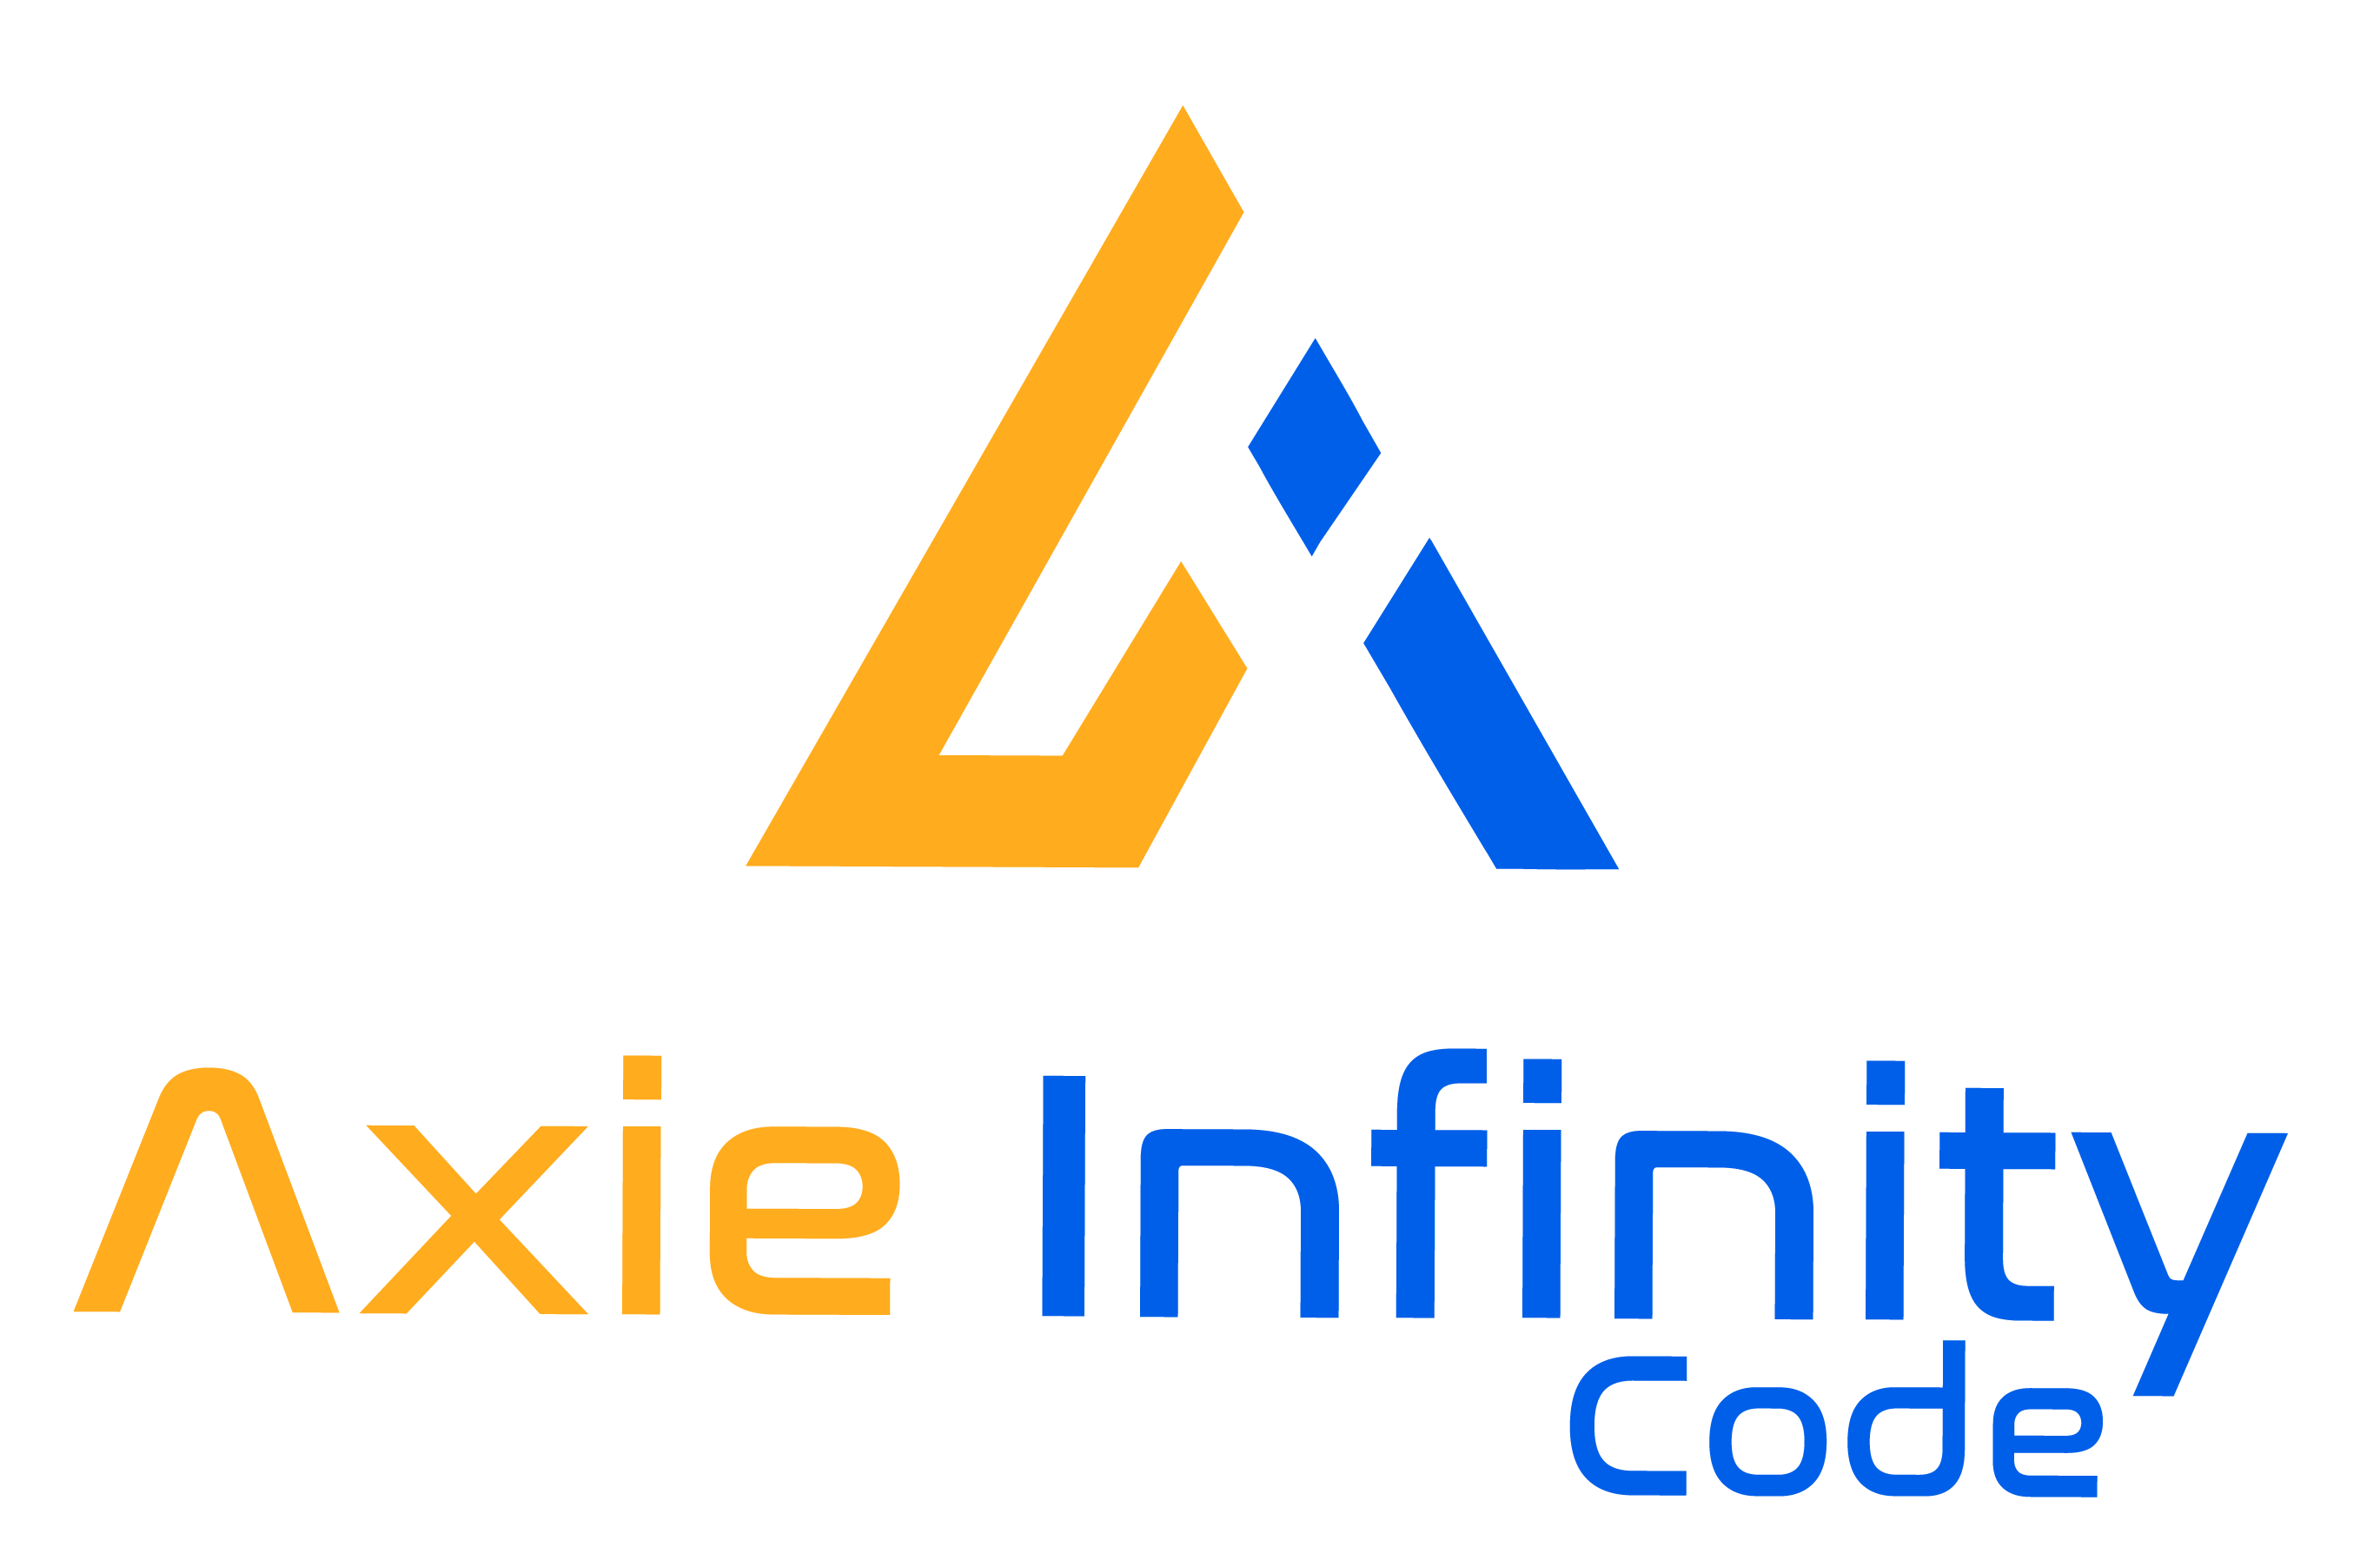 Axie Infinity Code - Tim Axie Infinity Code